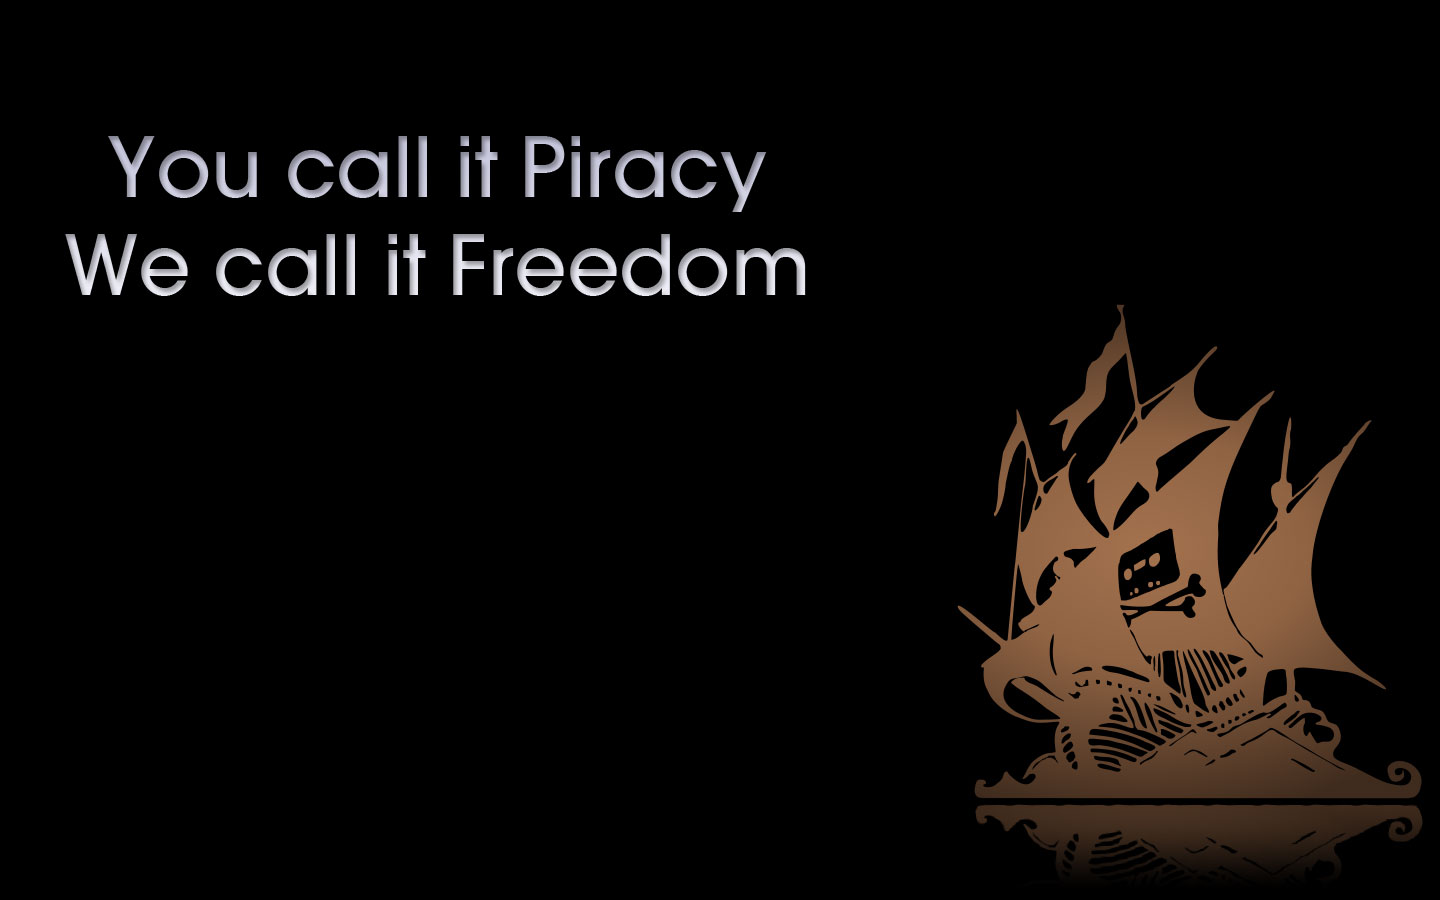 piracy%2Bfreedom.jpg